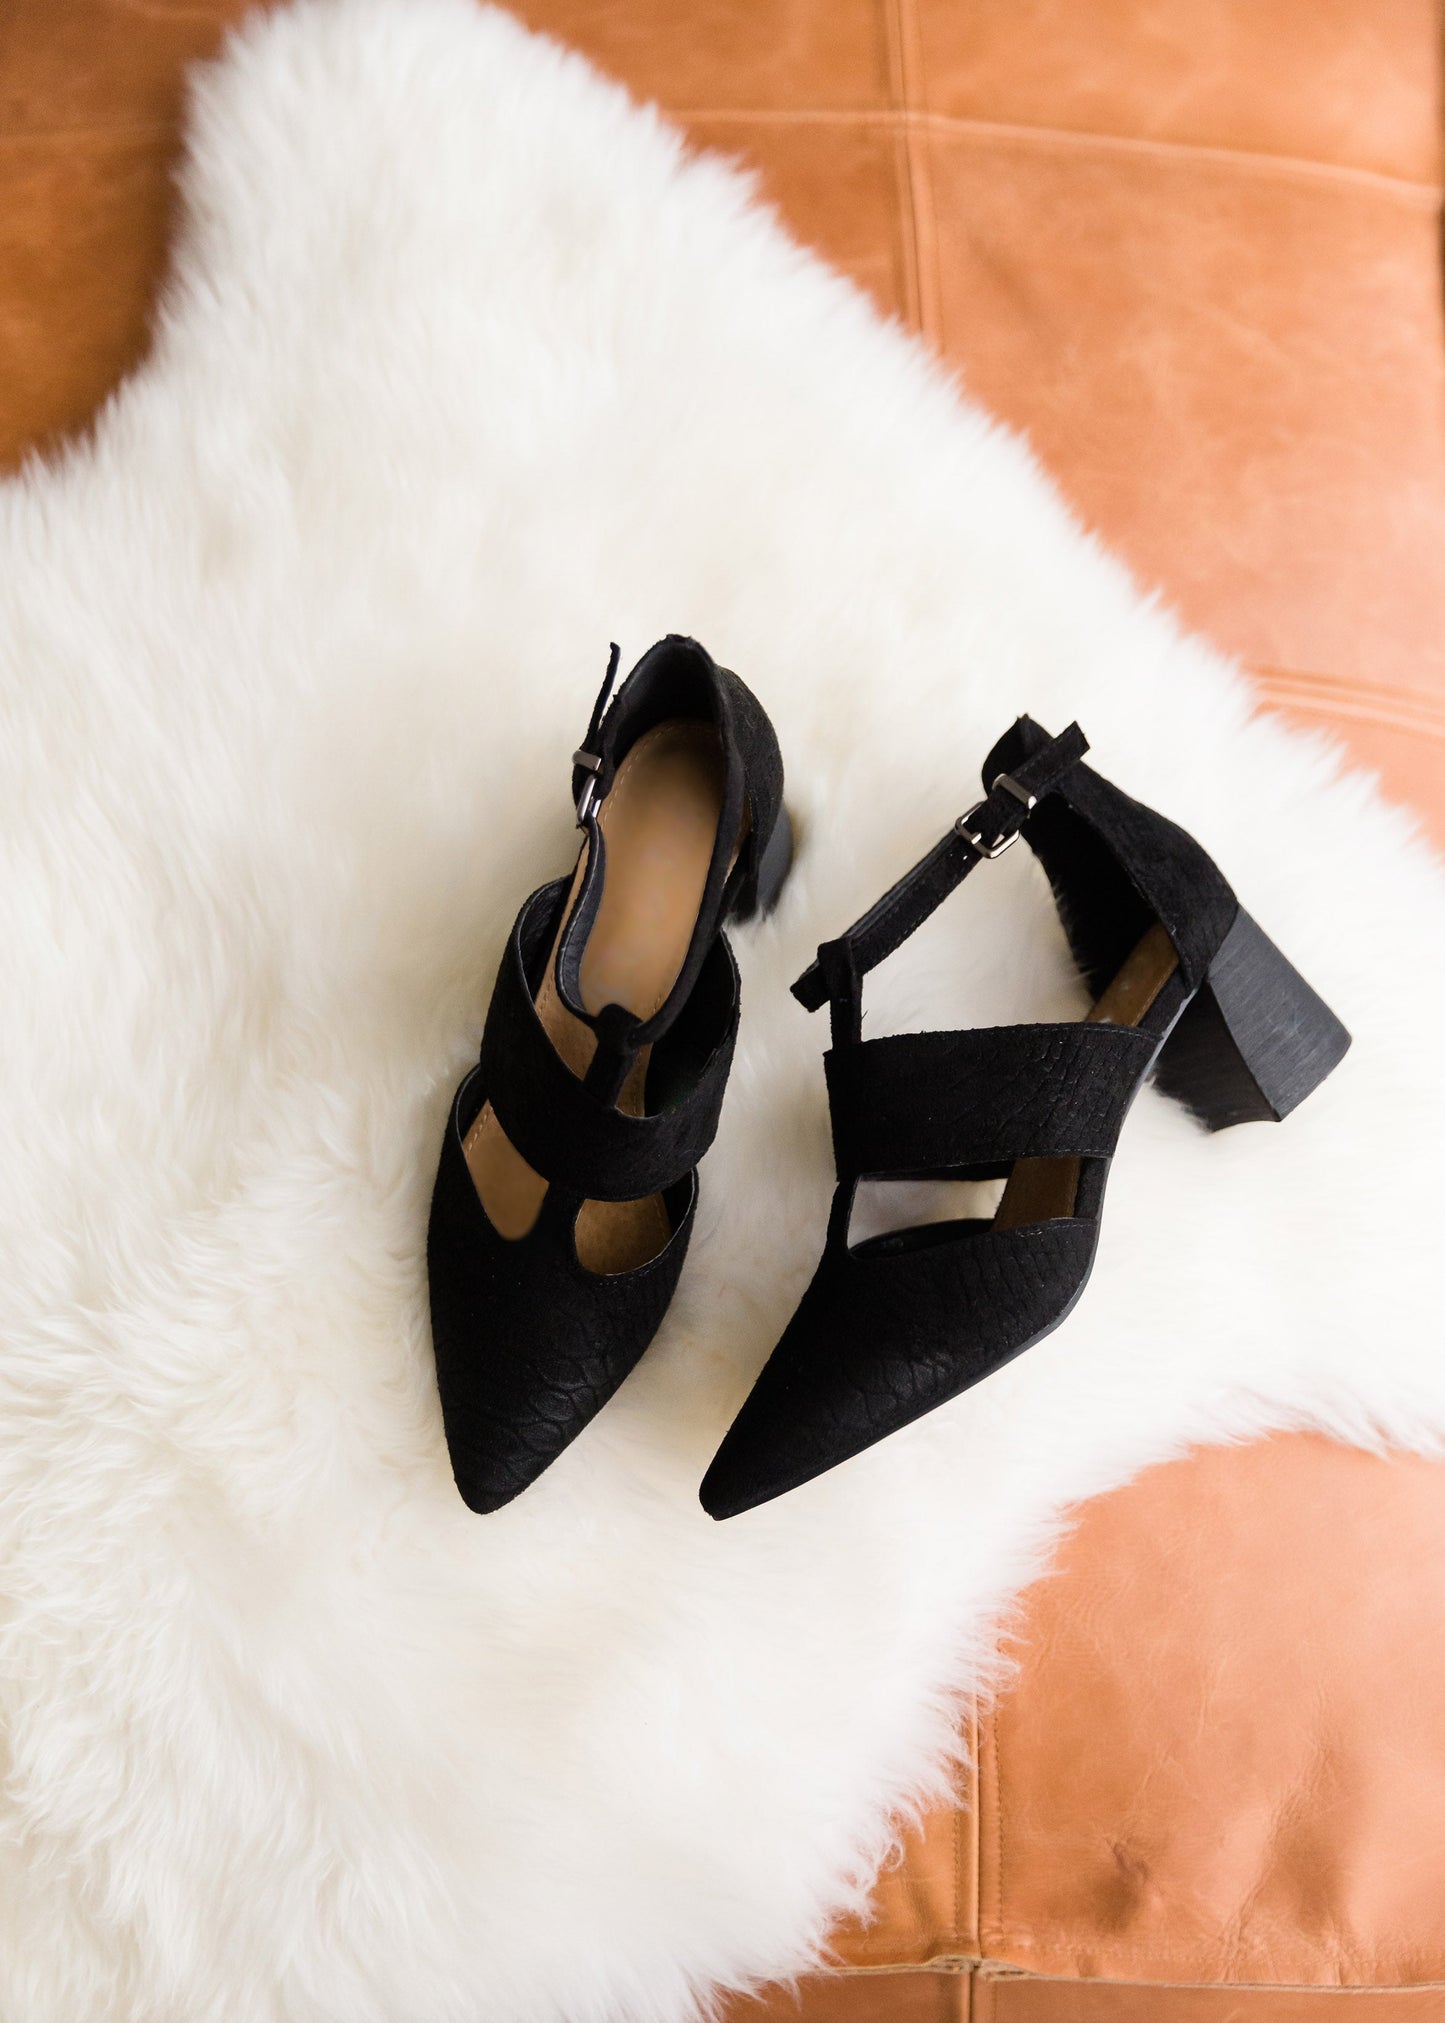 Black Suede Close Toed Heel - FINAL SALE Shoes